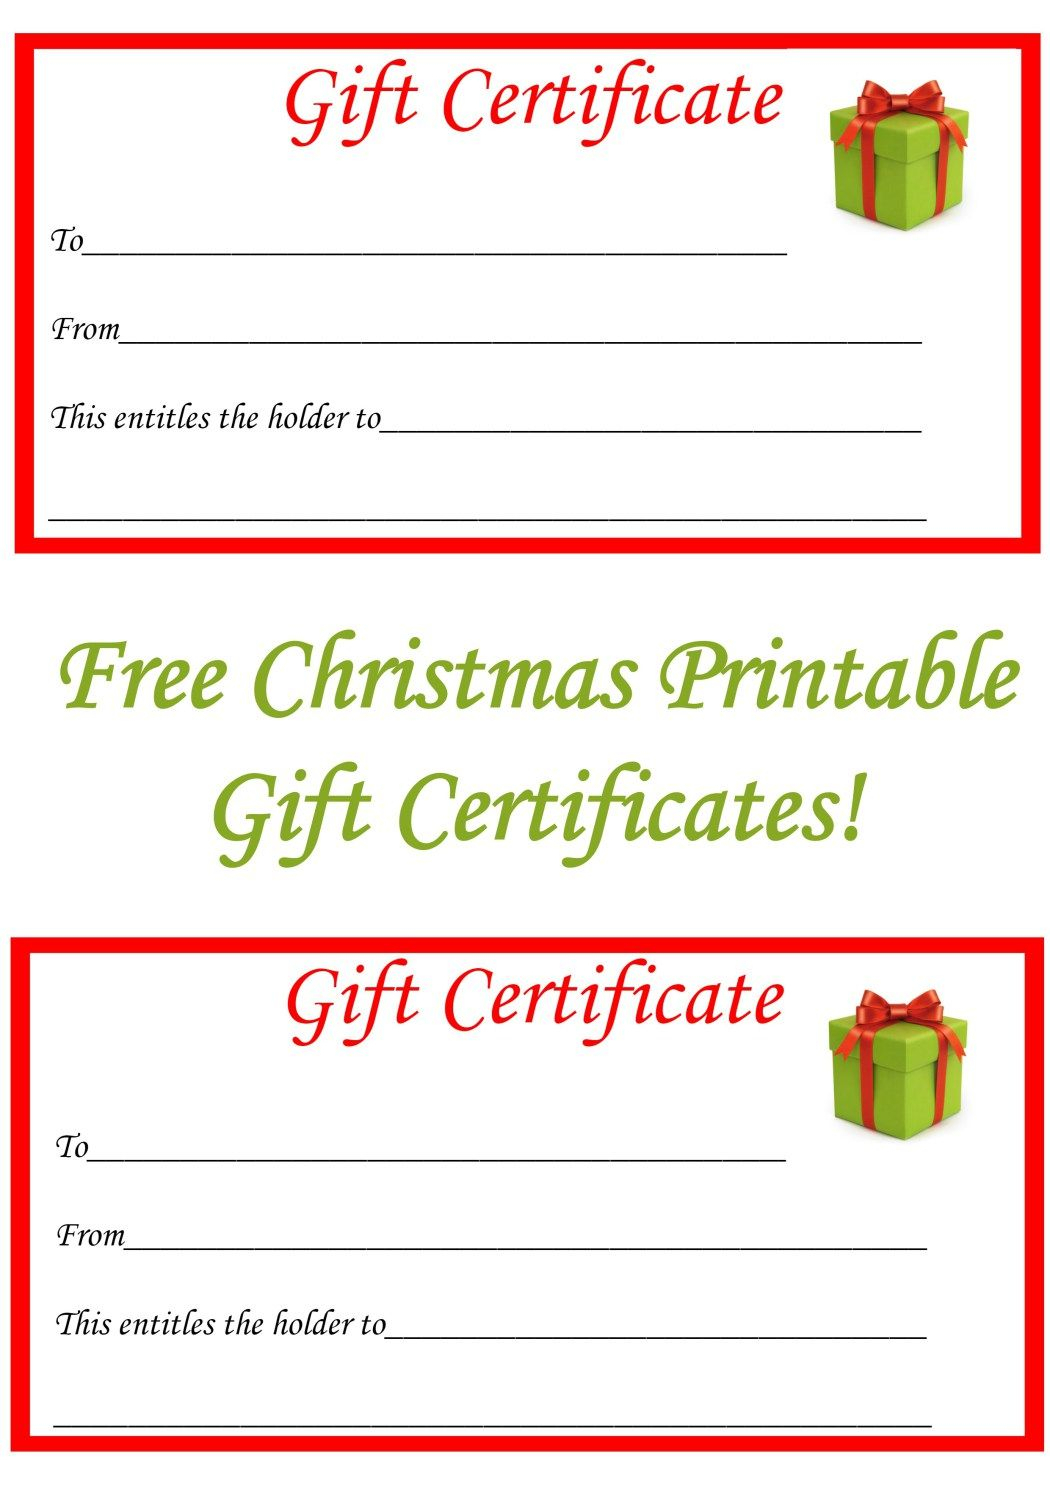 Free Christmas Printable Gift Certificates | Gift Ideas Regarding Kids Gift Certificate Template